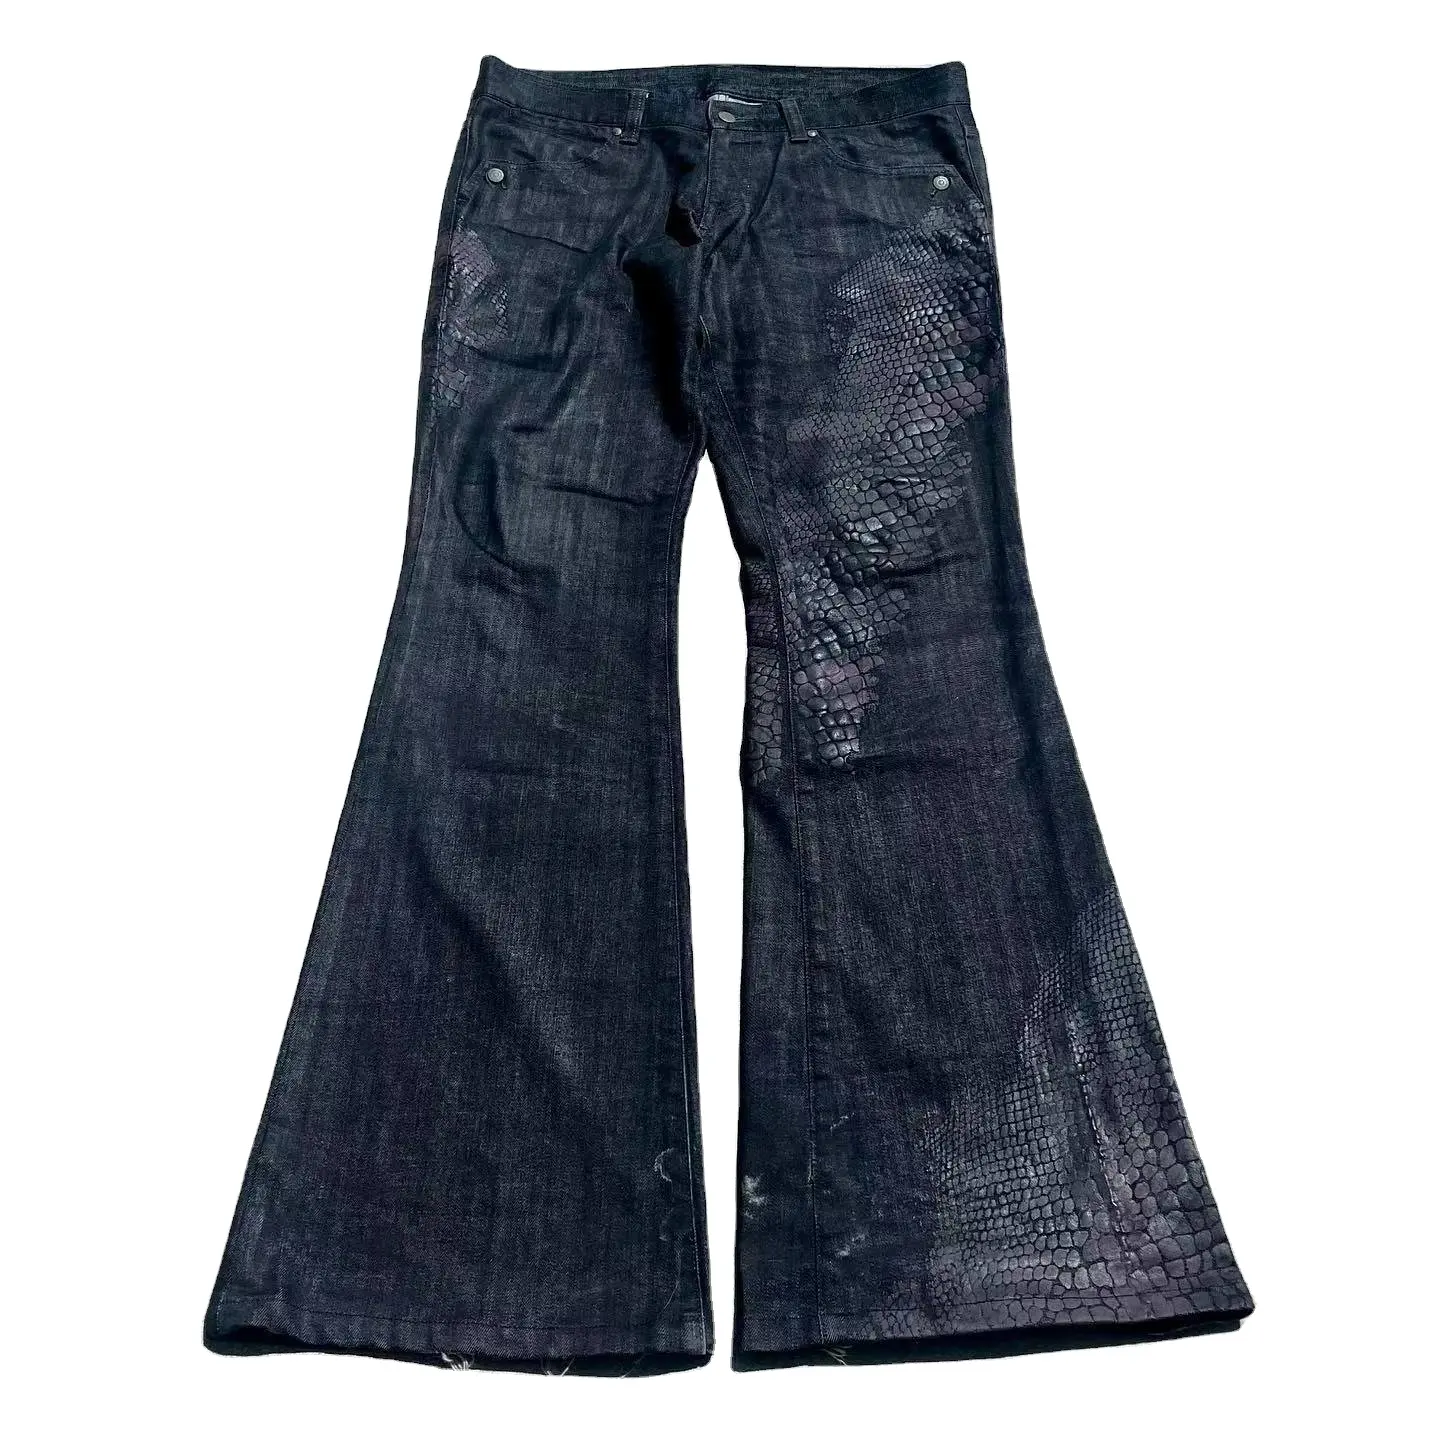 Custom Jeans longgar pria pola buaya hitam, Jeans dekorasi tali Retro trendi modis